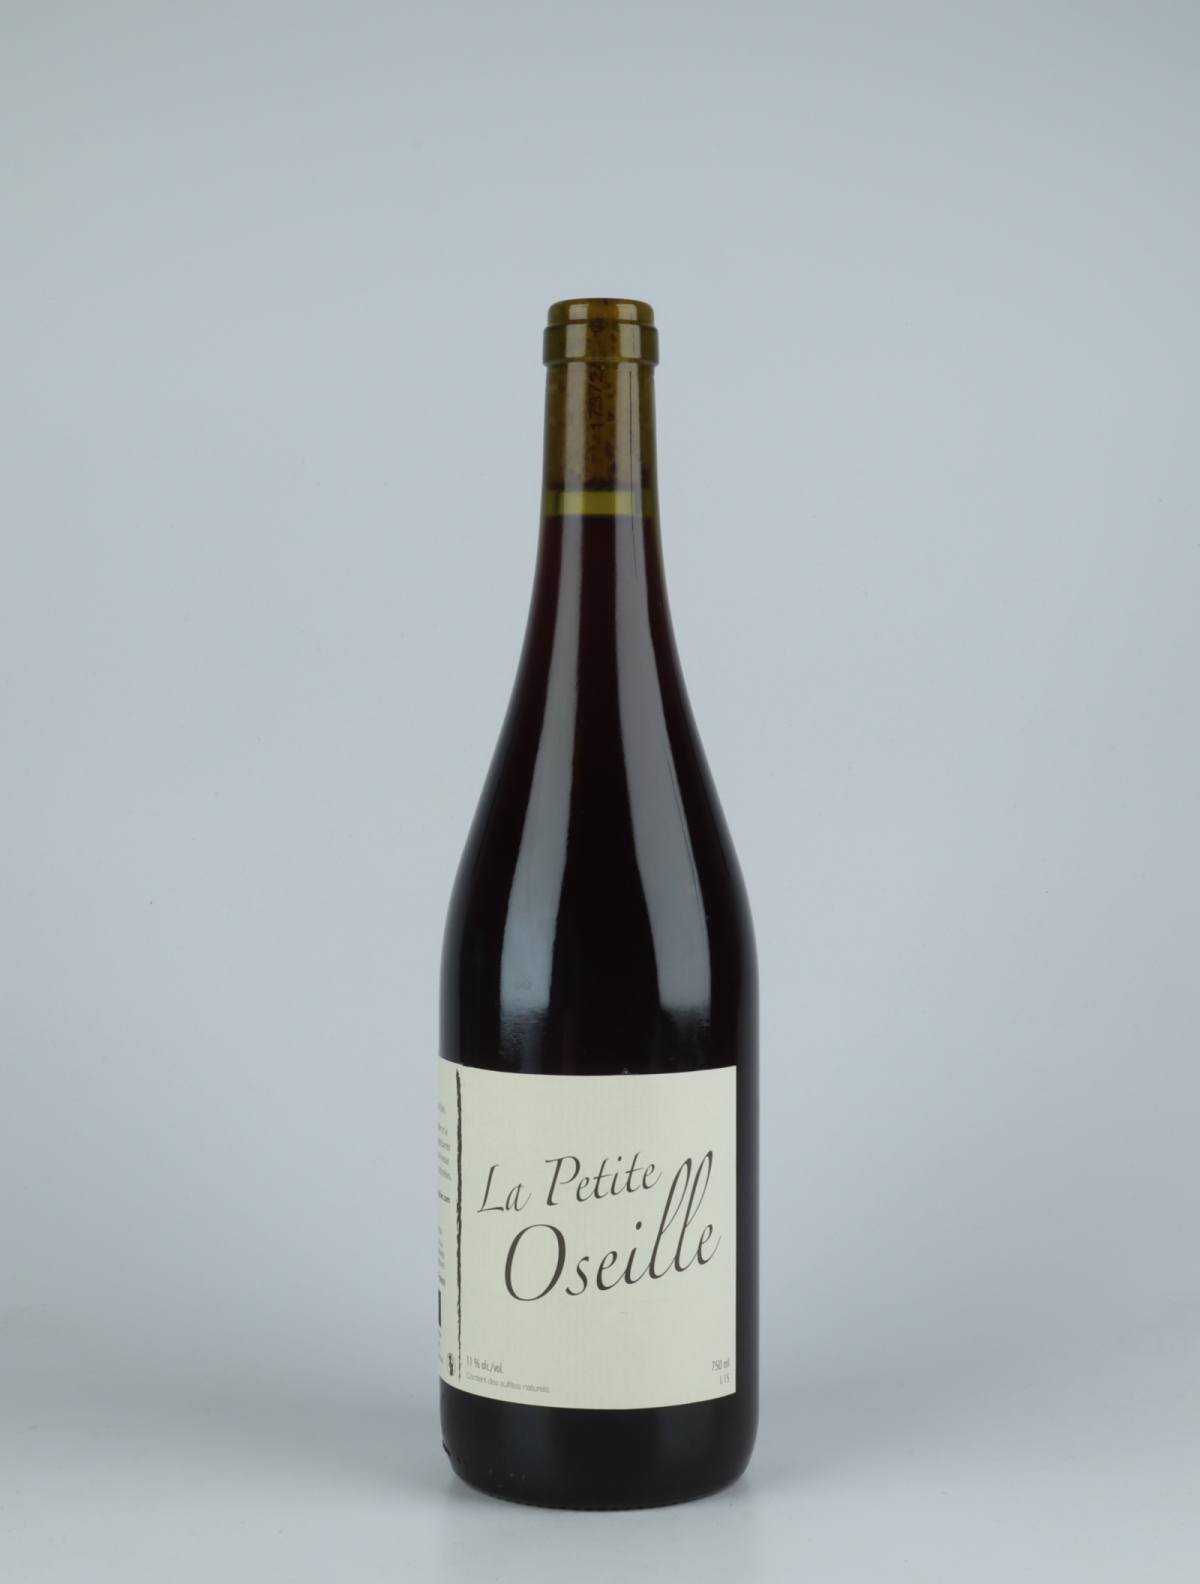 En flaske 2015 La Petite Oseille Rødvin fra Michel Guignier, Beaujolais i Frankrig